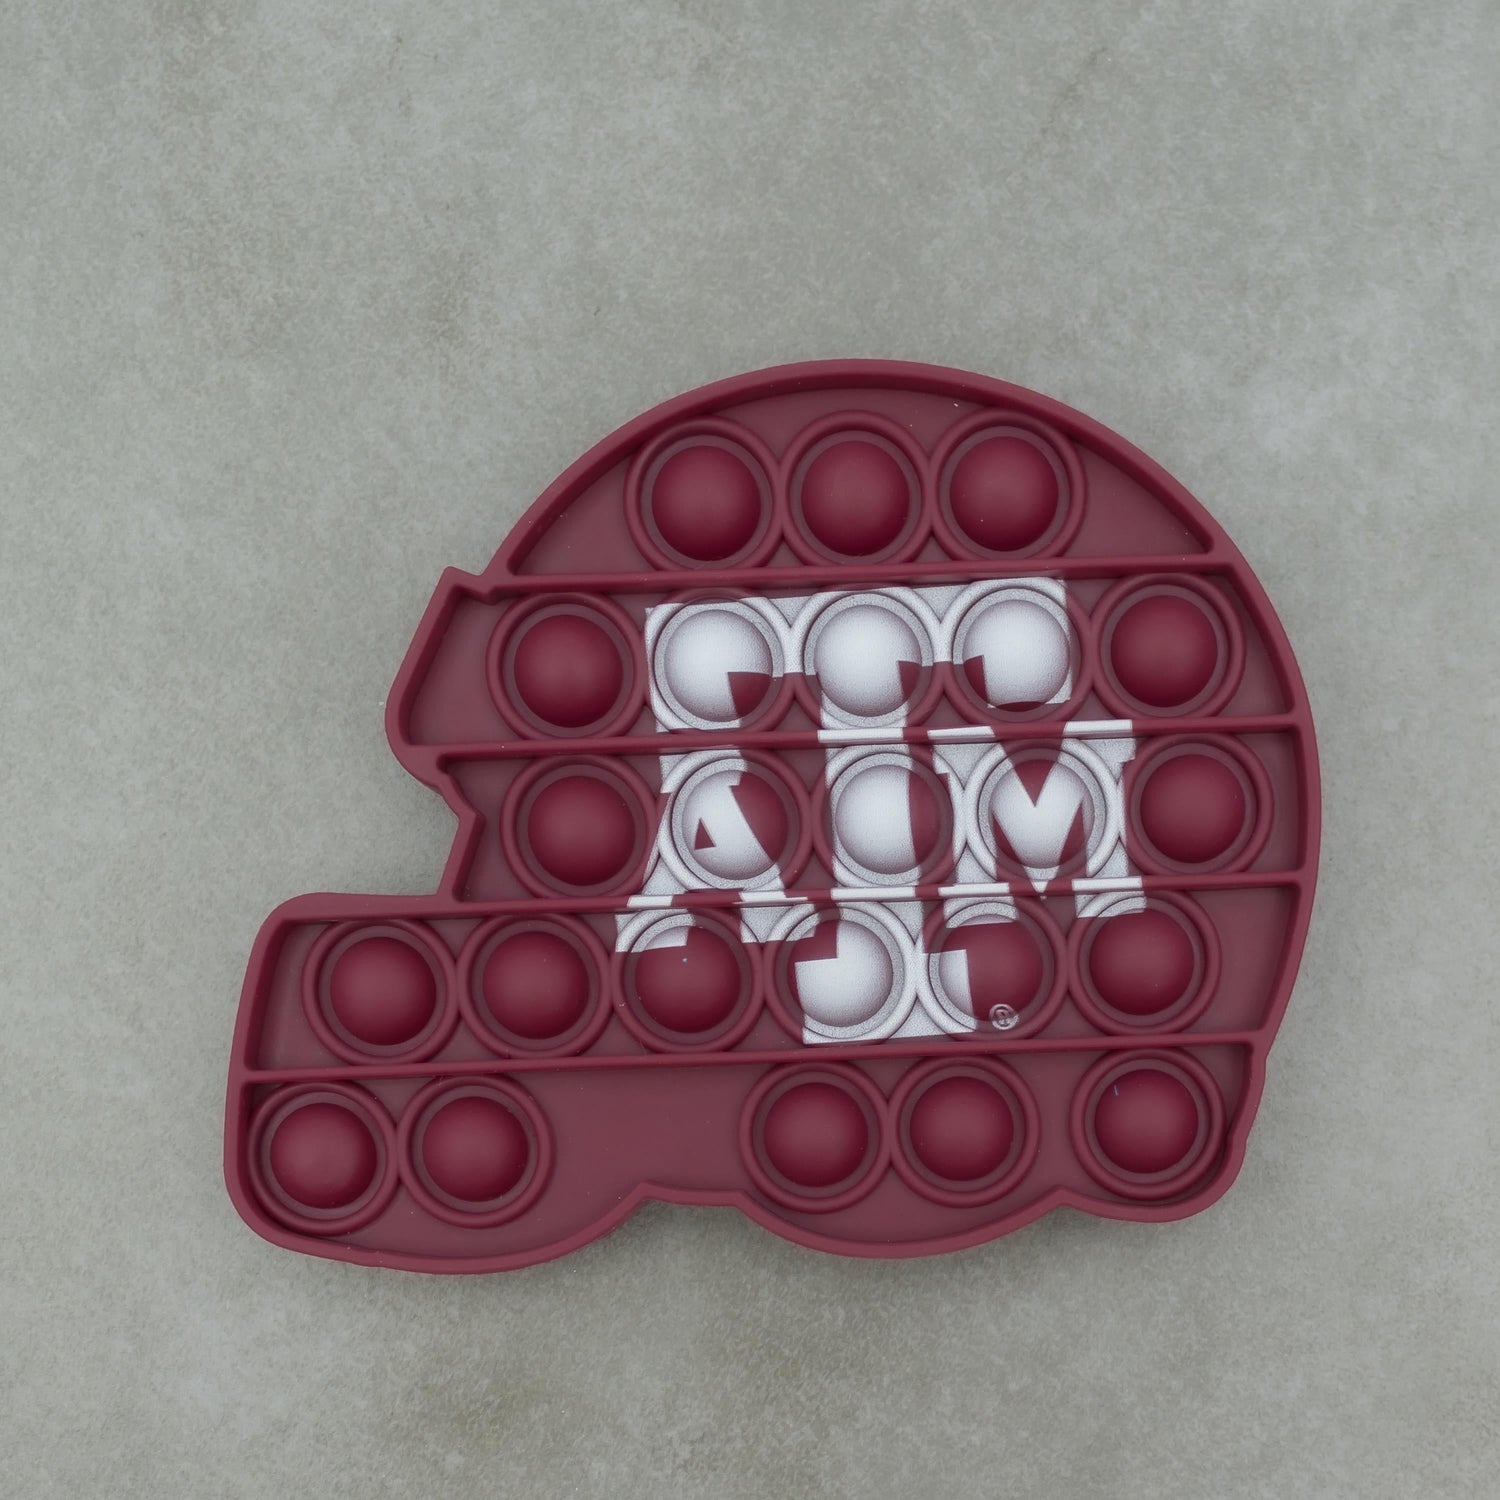 Texas A&M Football Helmet & Circle Push-Itz 2 Pack